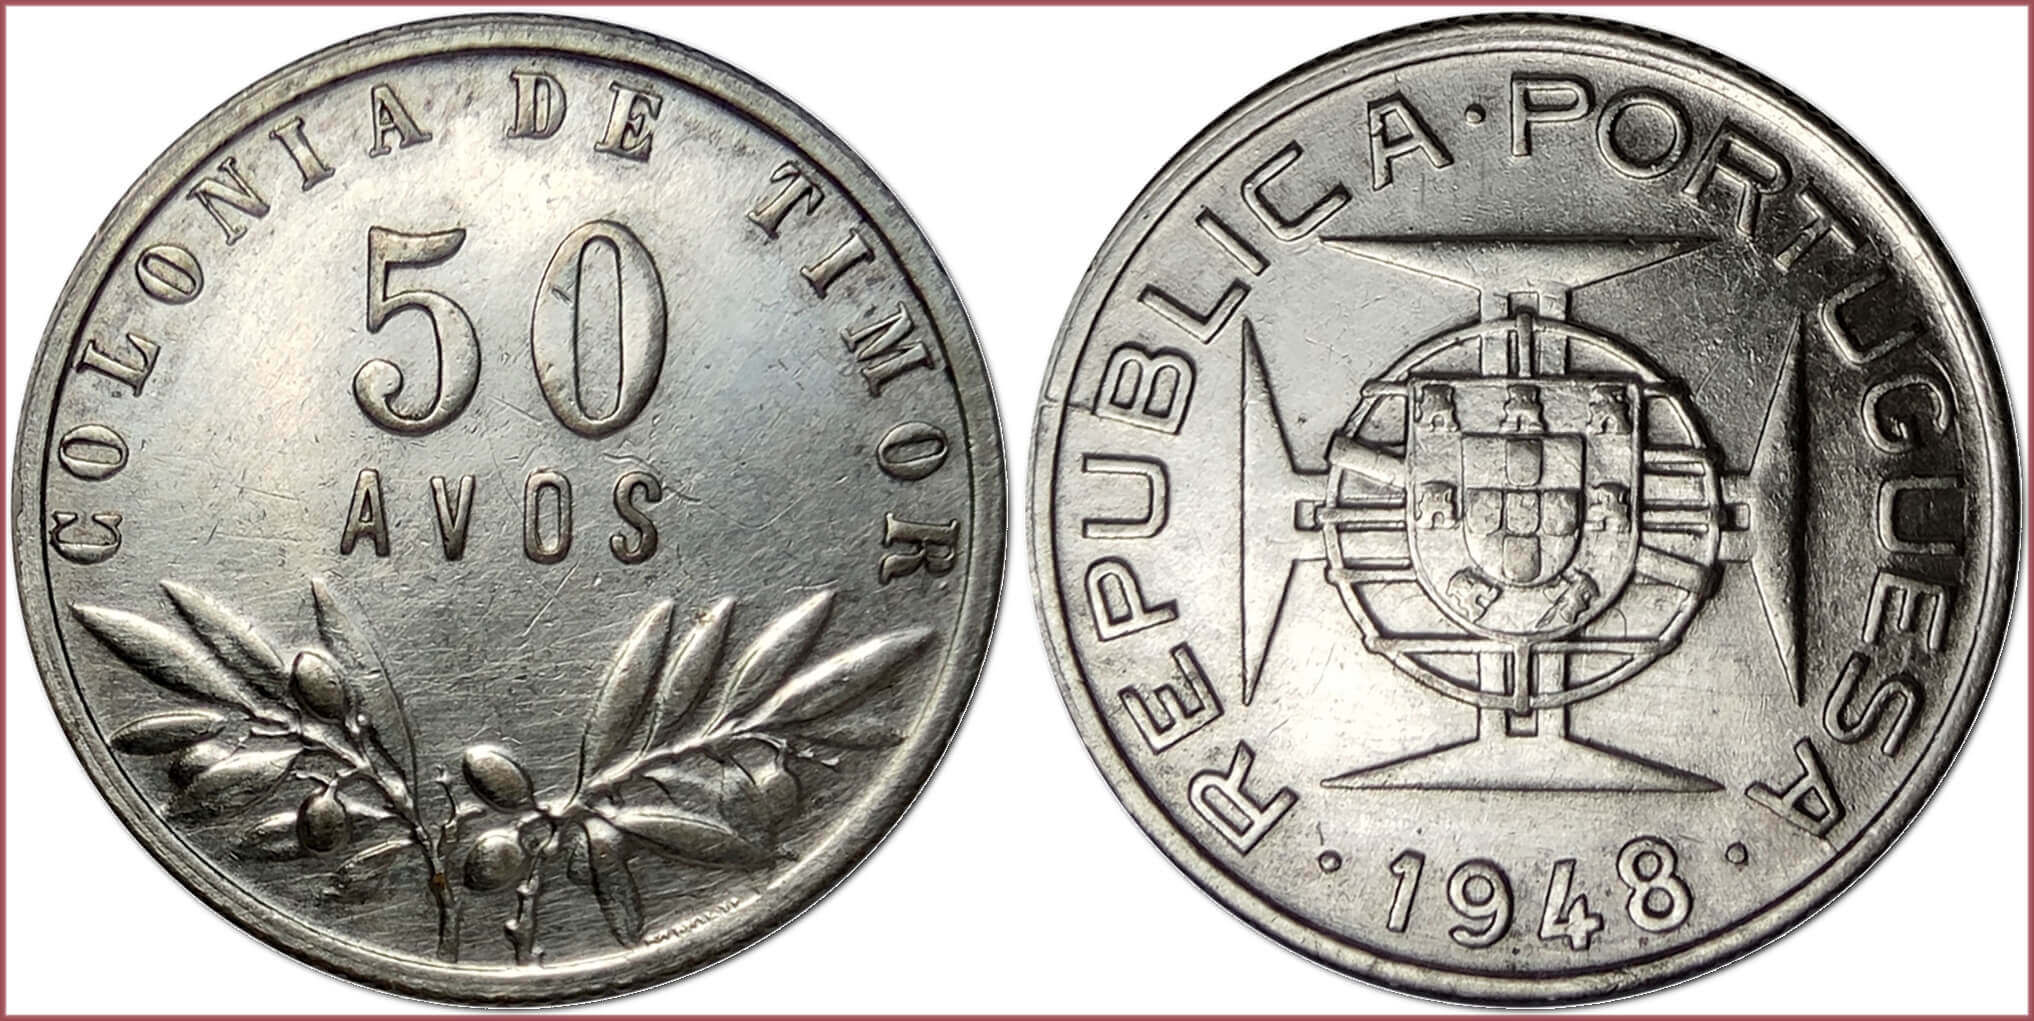 50 avos, 1948: Portuguese Timor